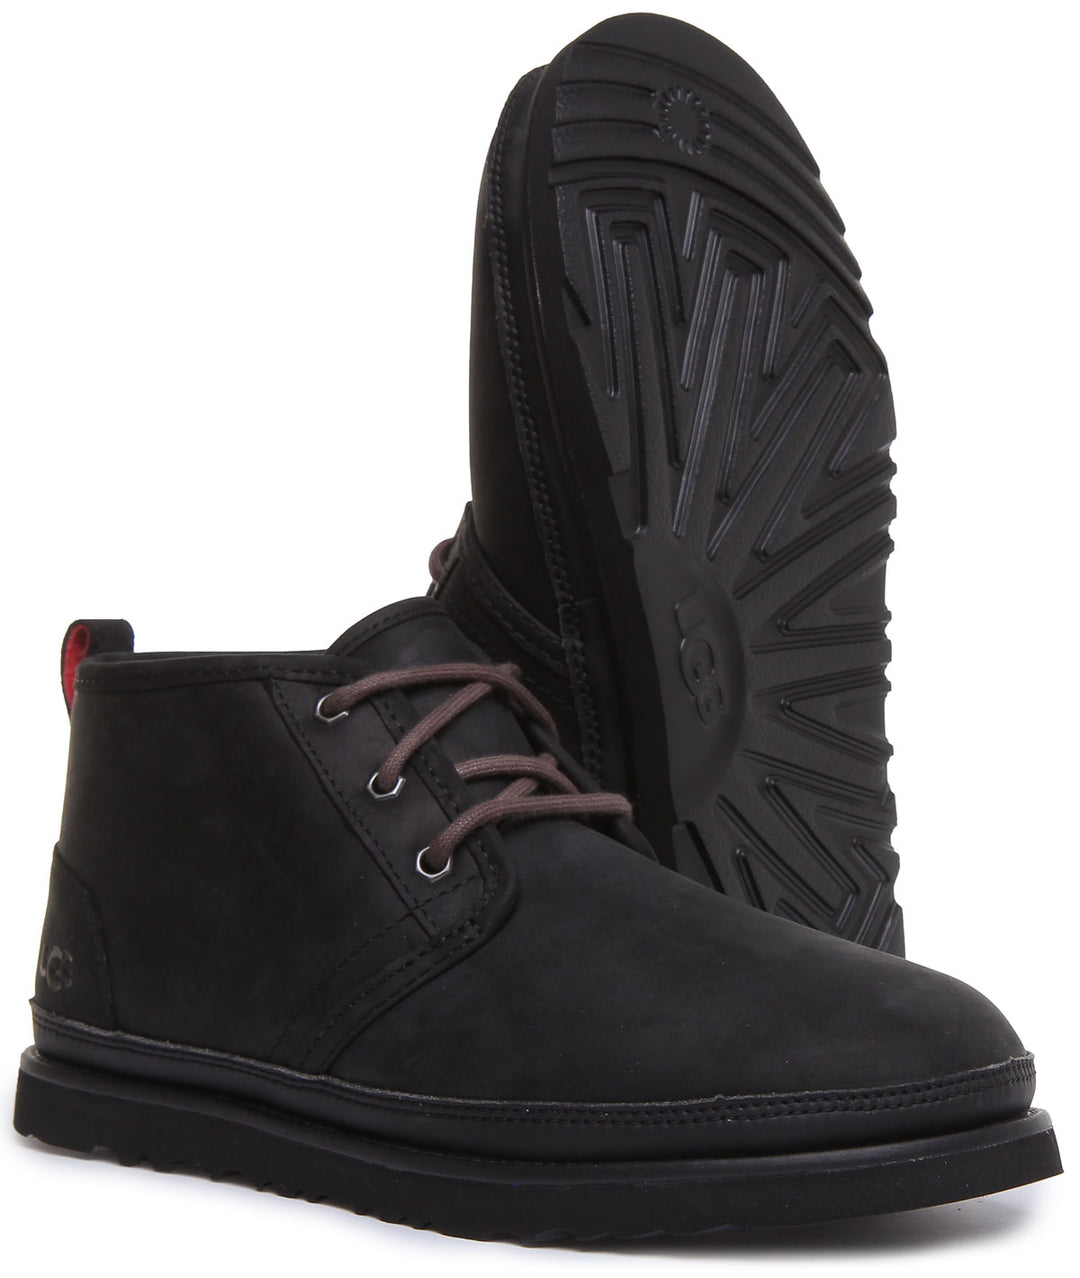 UGG NEUMEL - Boots à talons - black/noir 